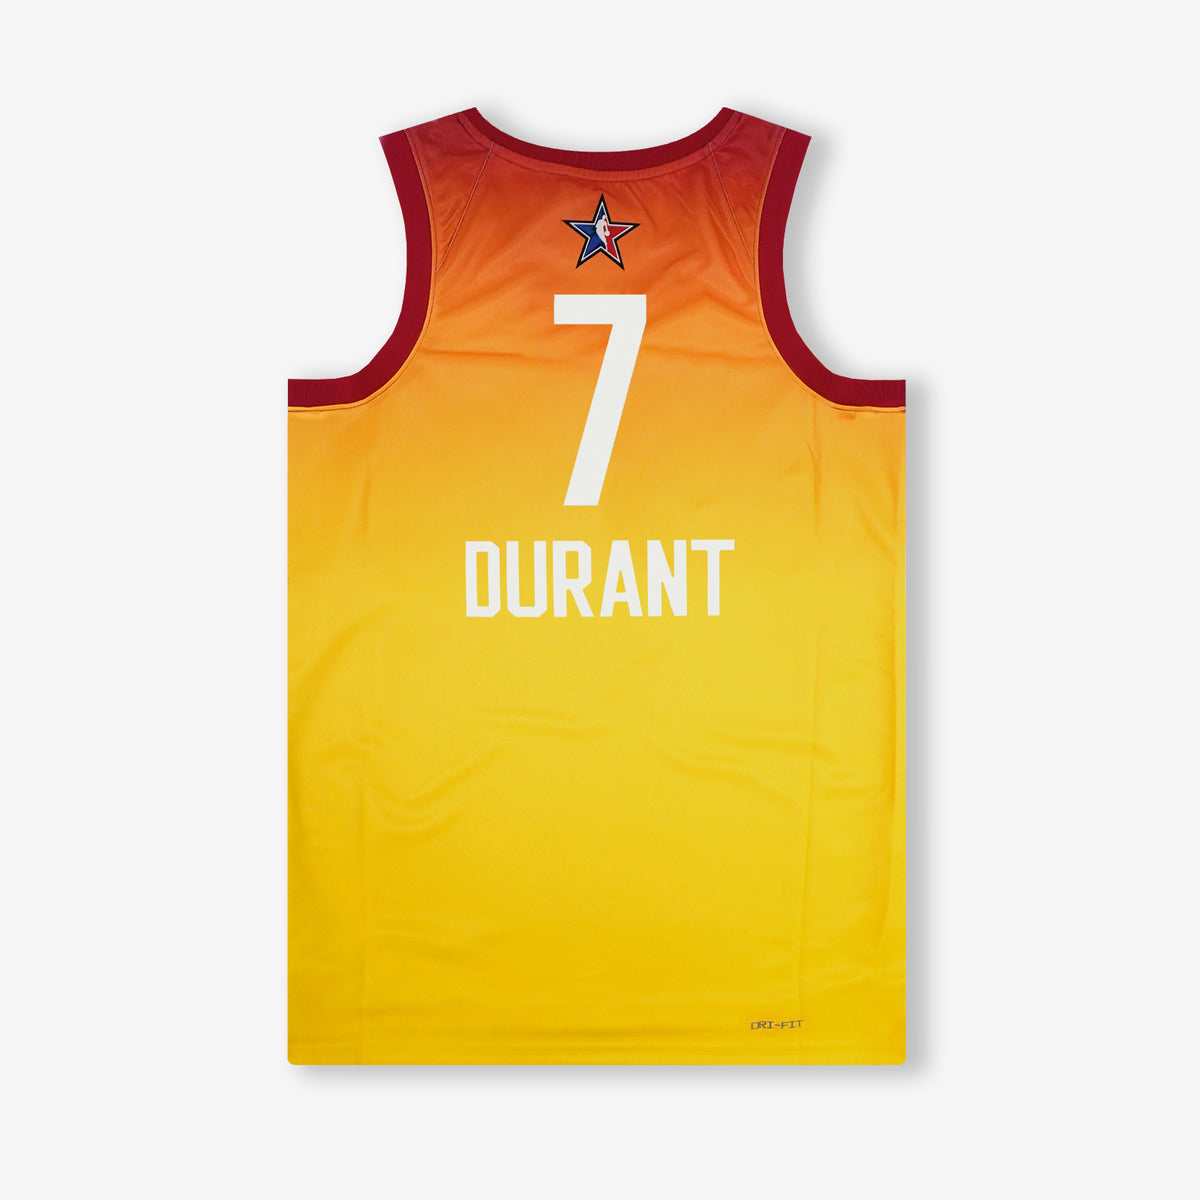 Kevin Durant City Edition NBA Swingman Jersey